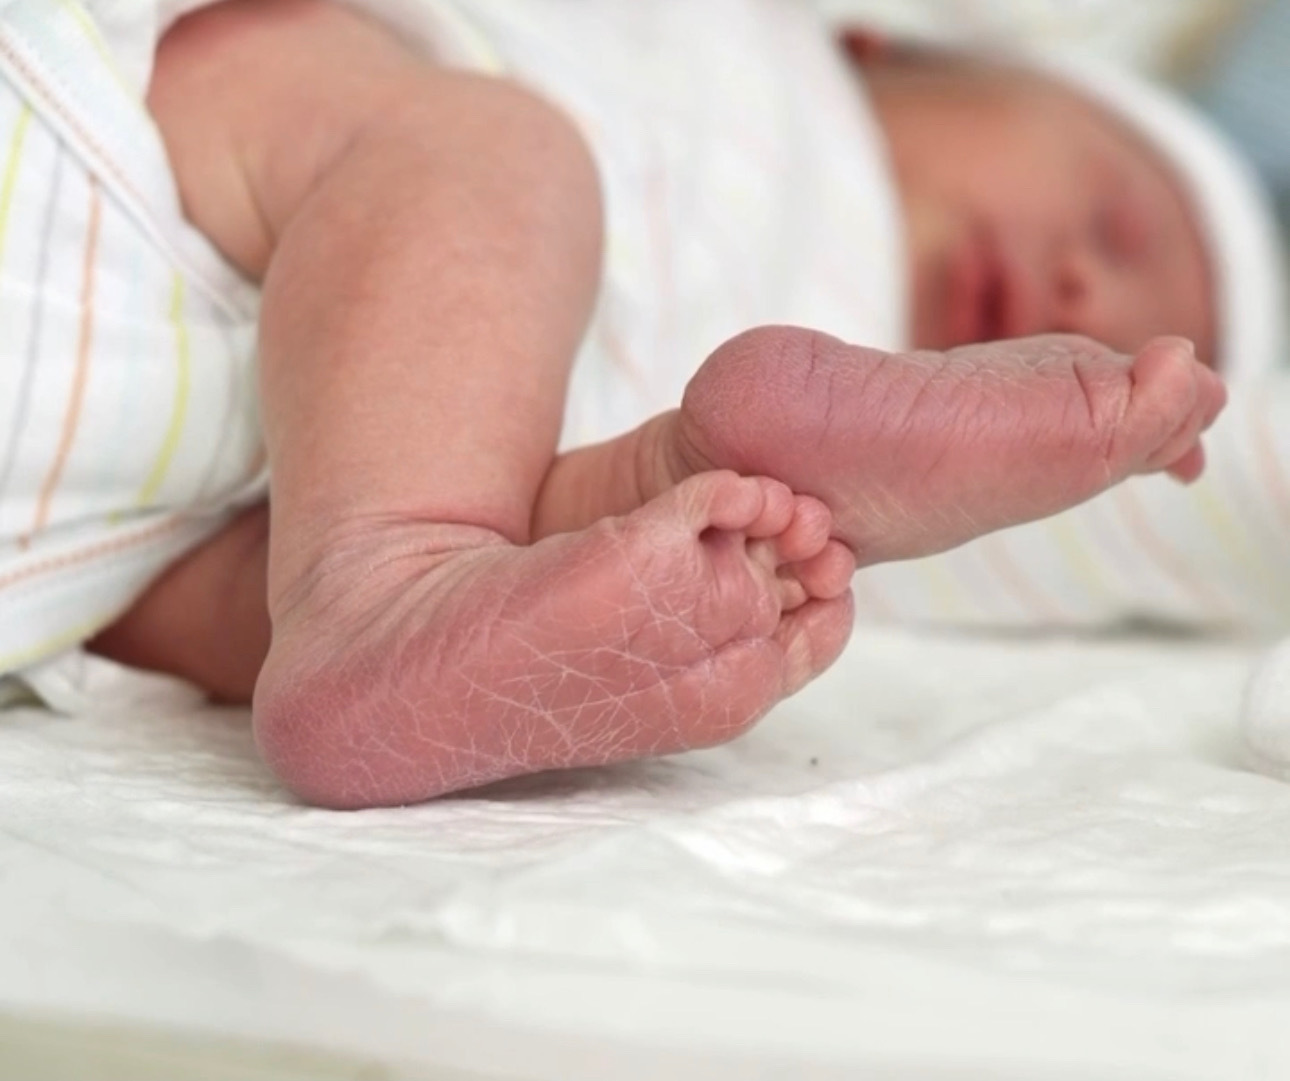 Can Newborns Sleep on Their Side?